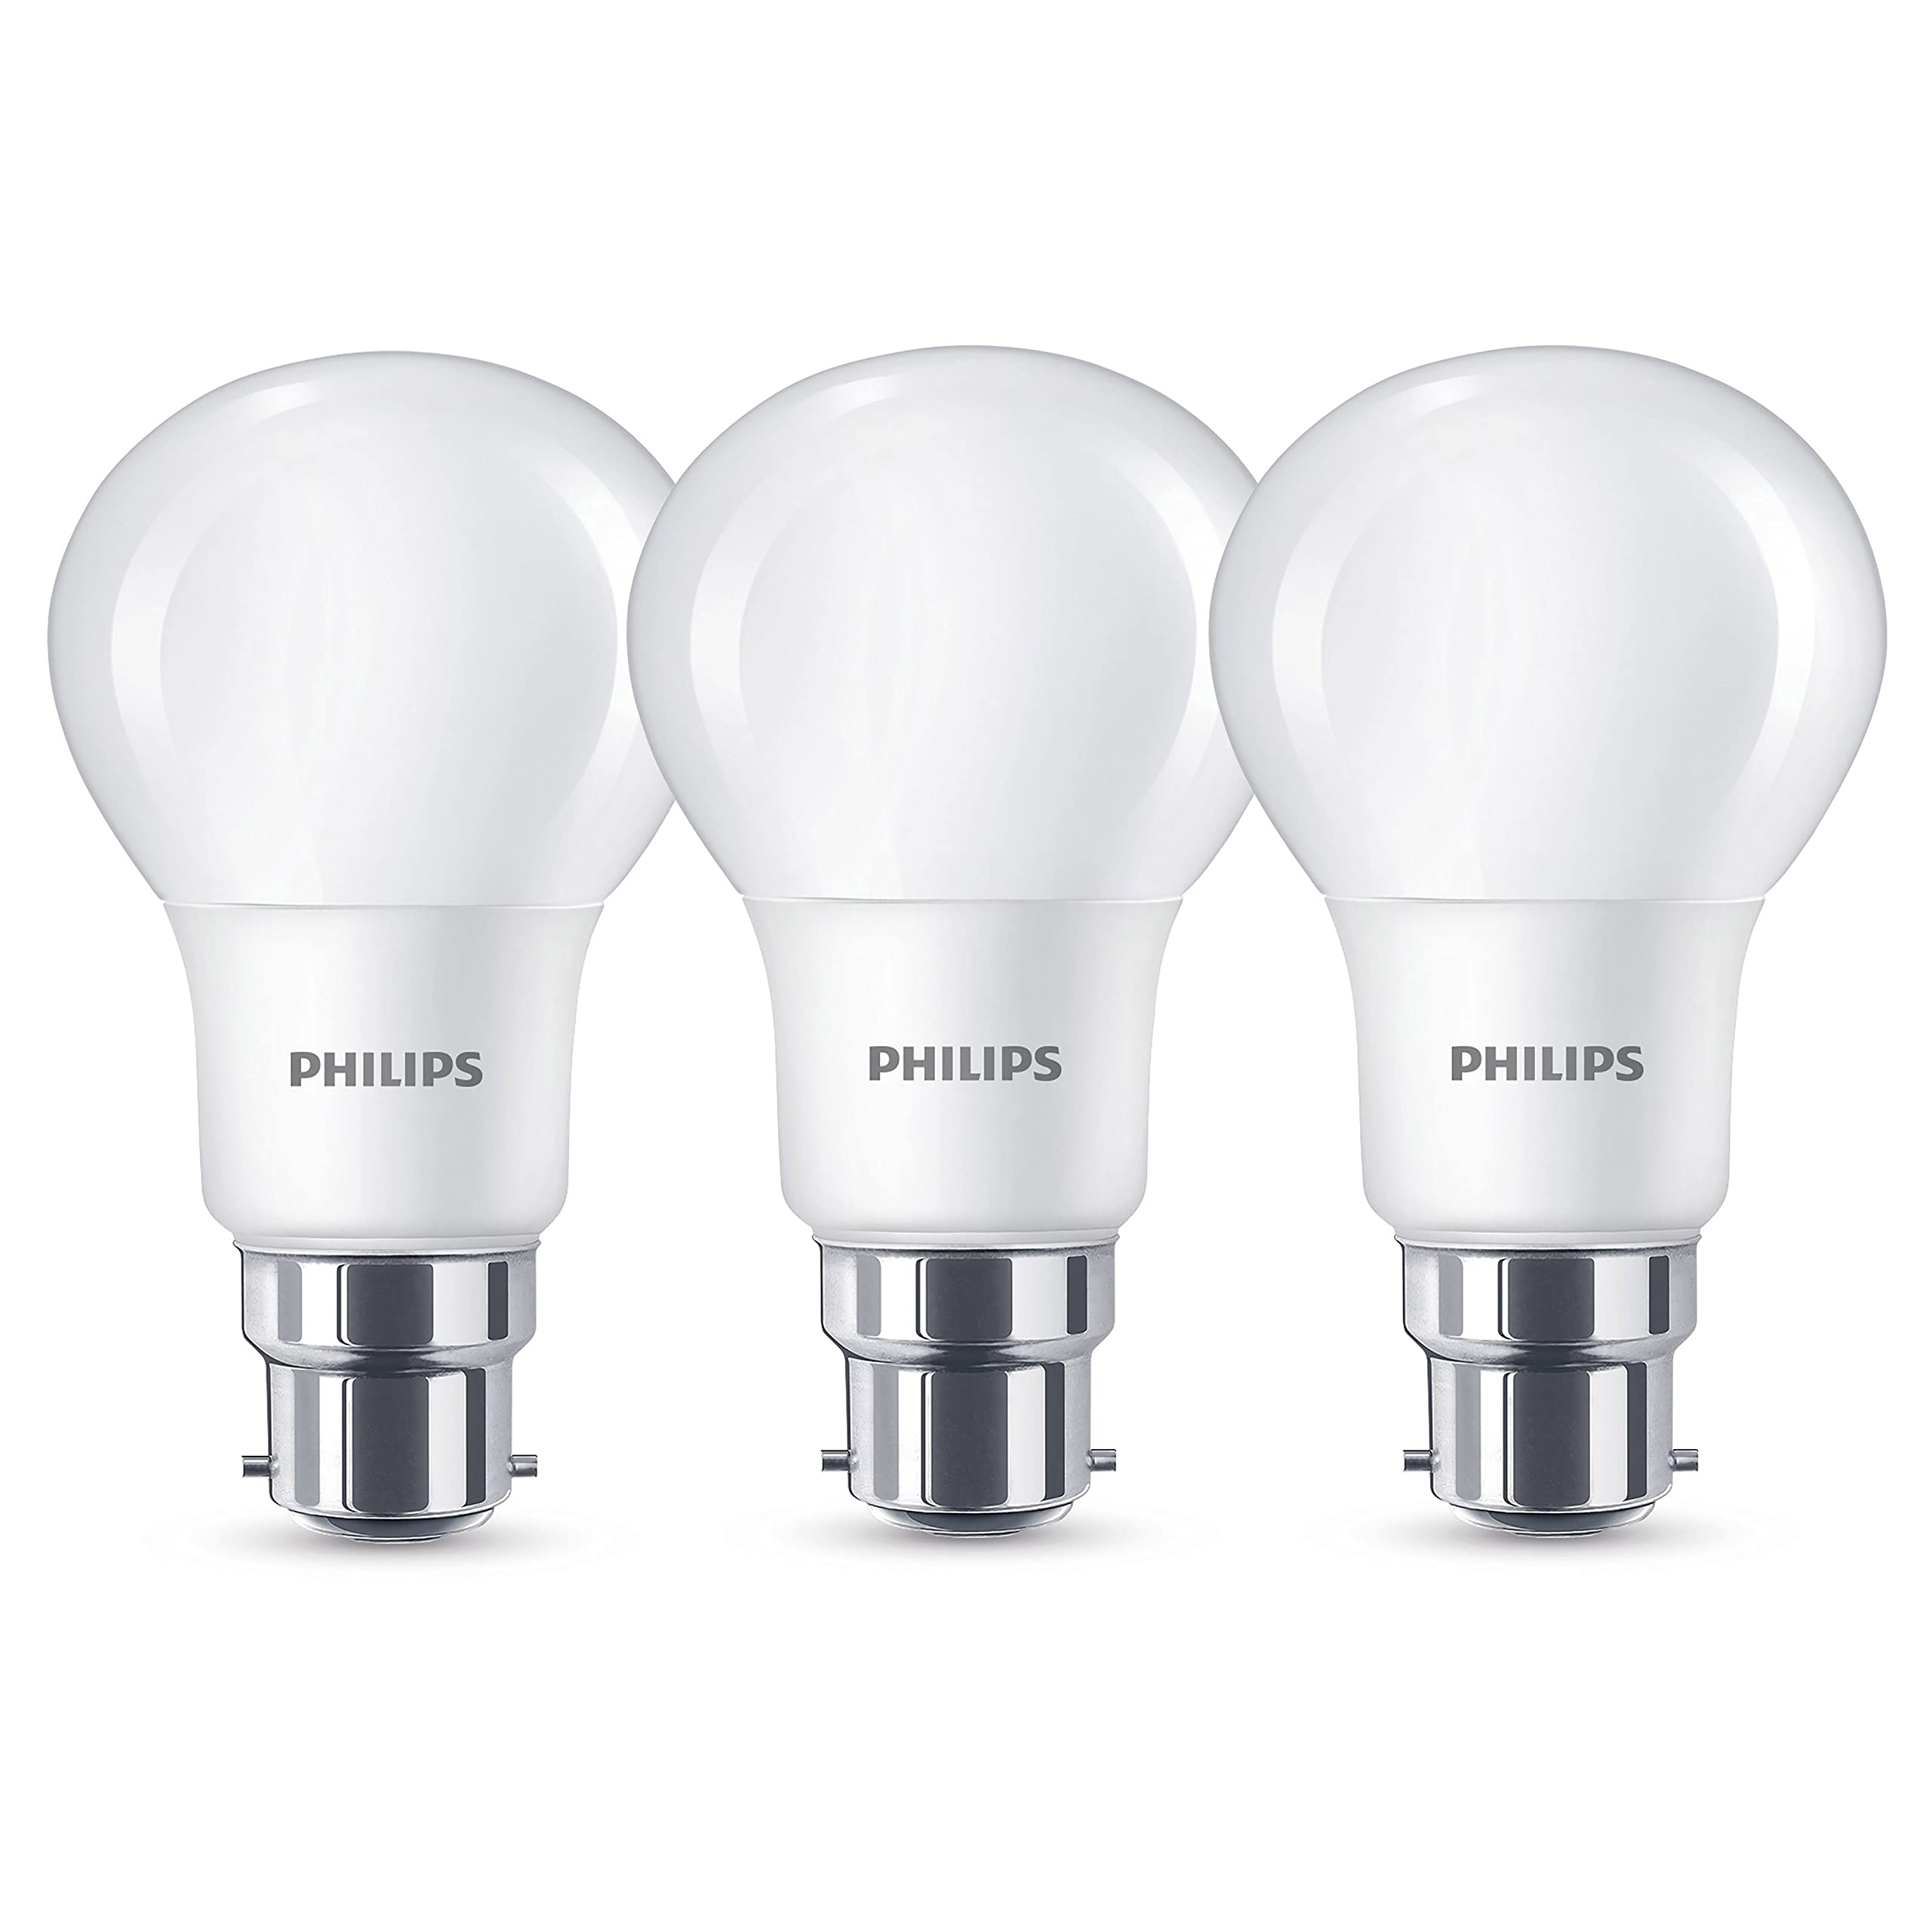 Philips 8w Corepro LED Bulb, 3 Pack, Bayonet Cap, 806 Lumens, 8718696657768